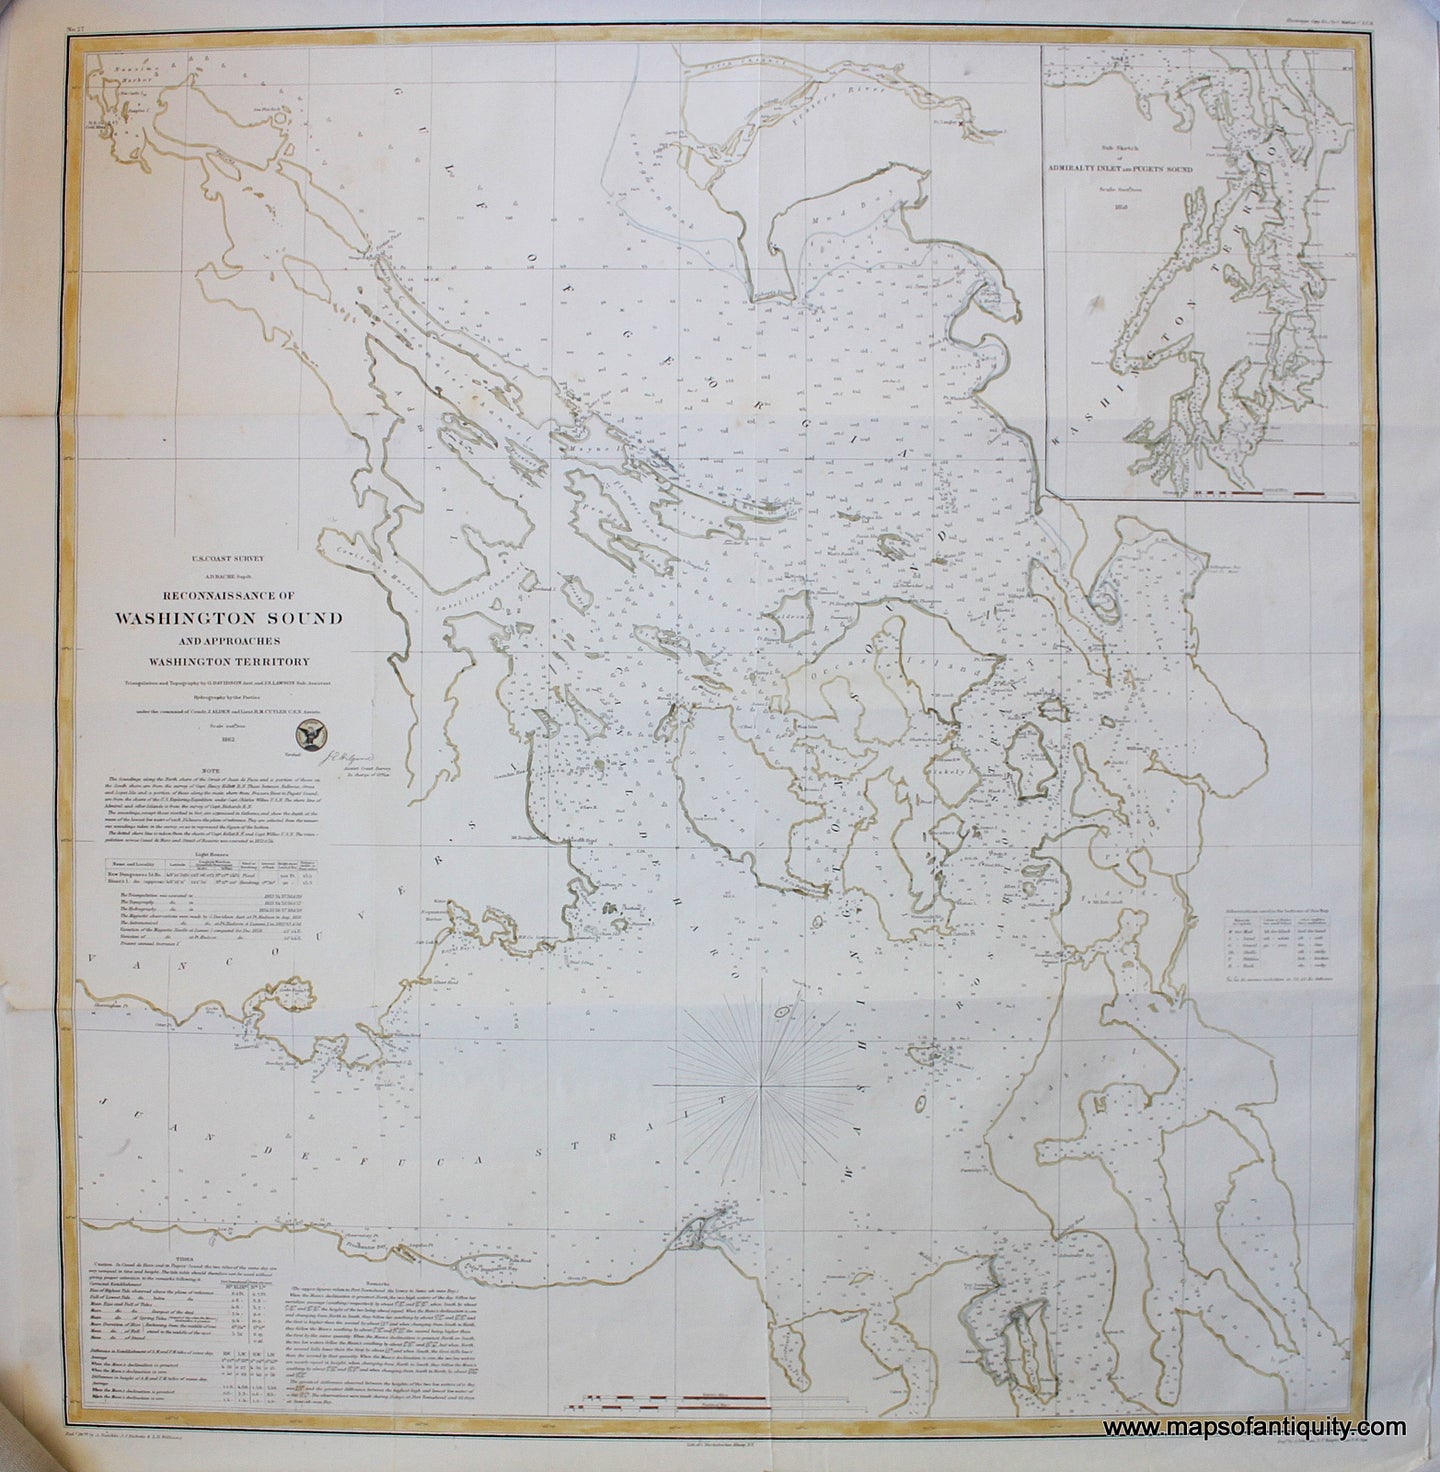 Hand-Colored-Original-Antique-Coastal-Chart-Reconnaissance-of-Washington-Sound-and-Approaches-Washington-Territory-******-Washington-Antique-Nautical-Charts-1862-U.S.-Coast-Survey-Maps-Of-Antiquity